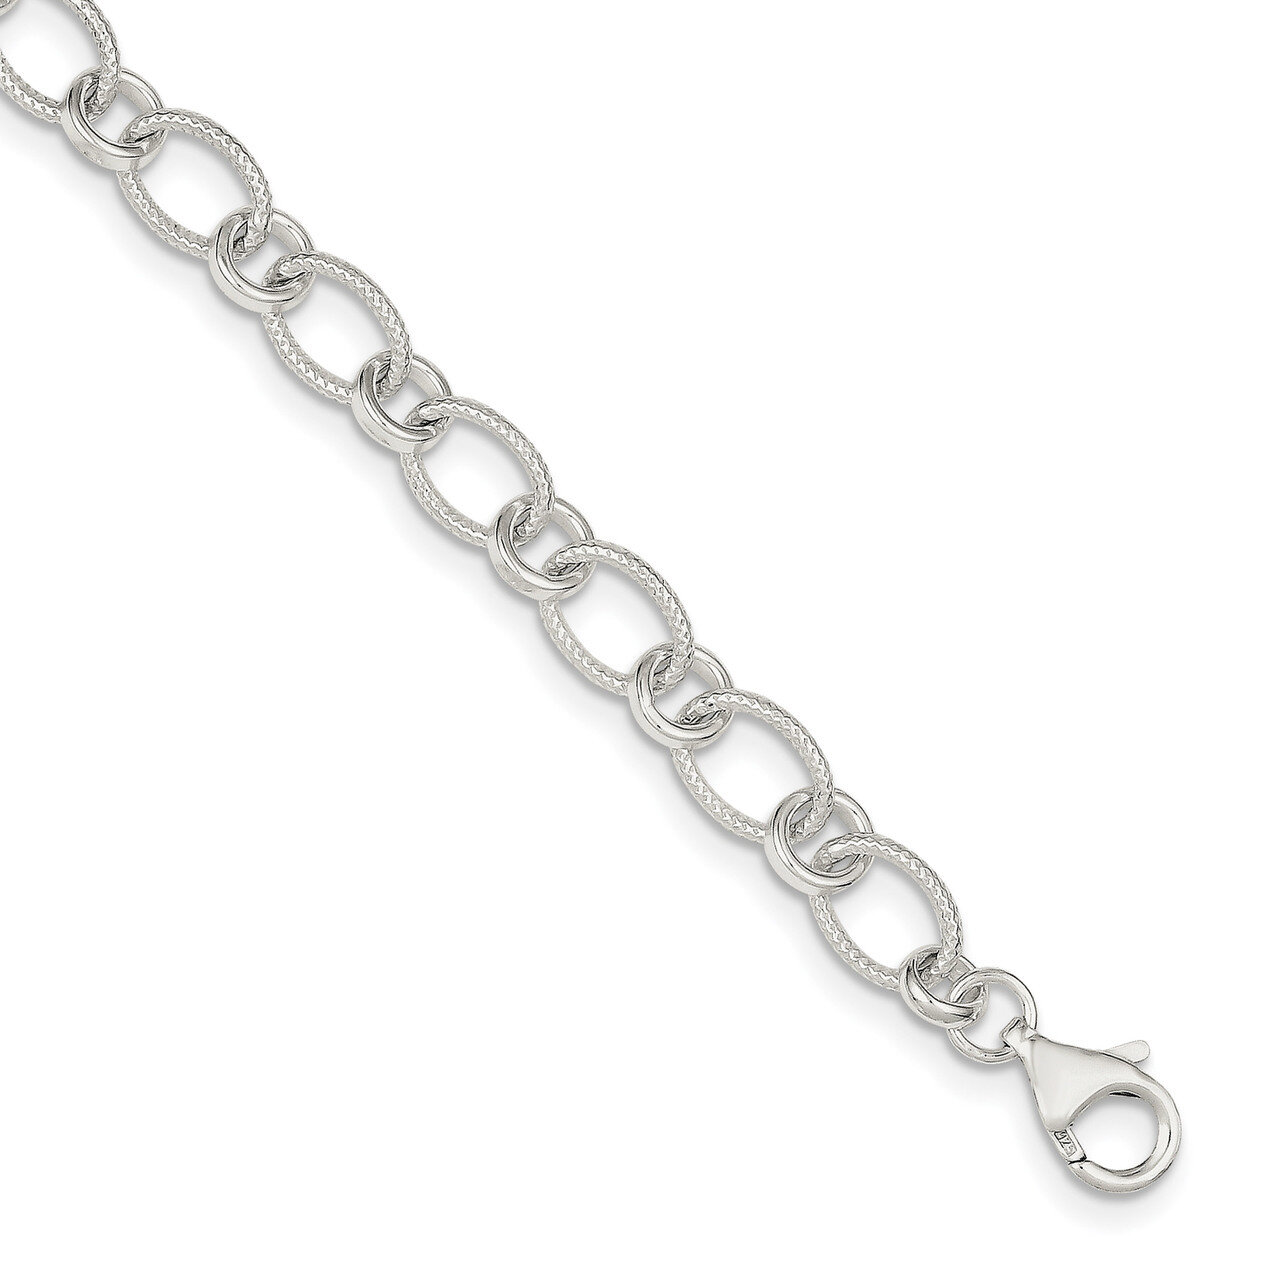 Bracelet 8.5 Inch Sterling Silver QG2225-8.5